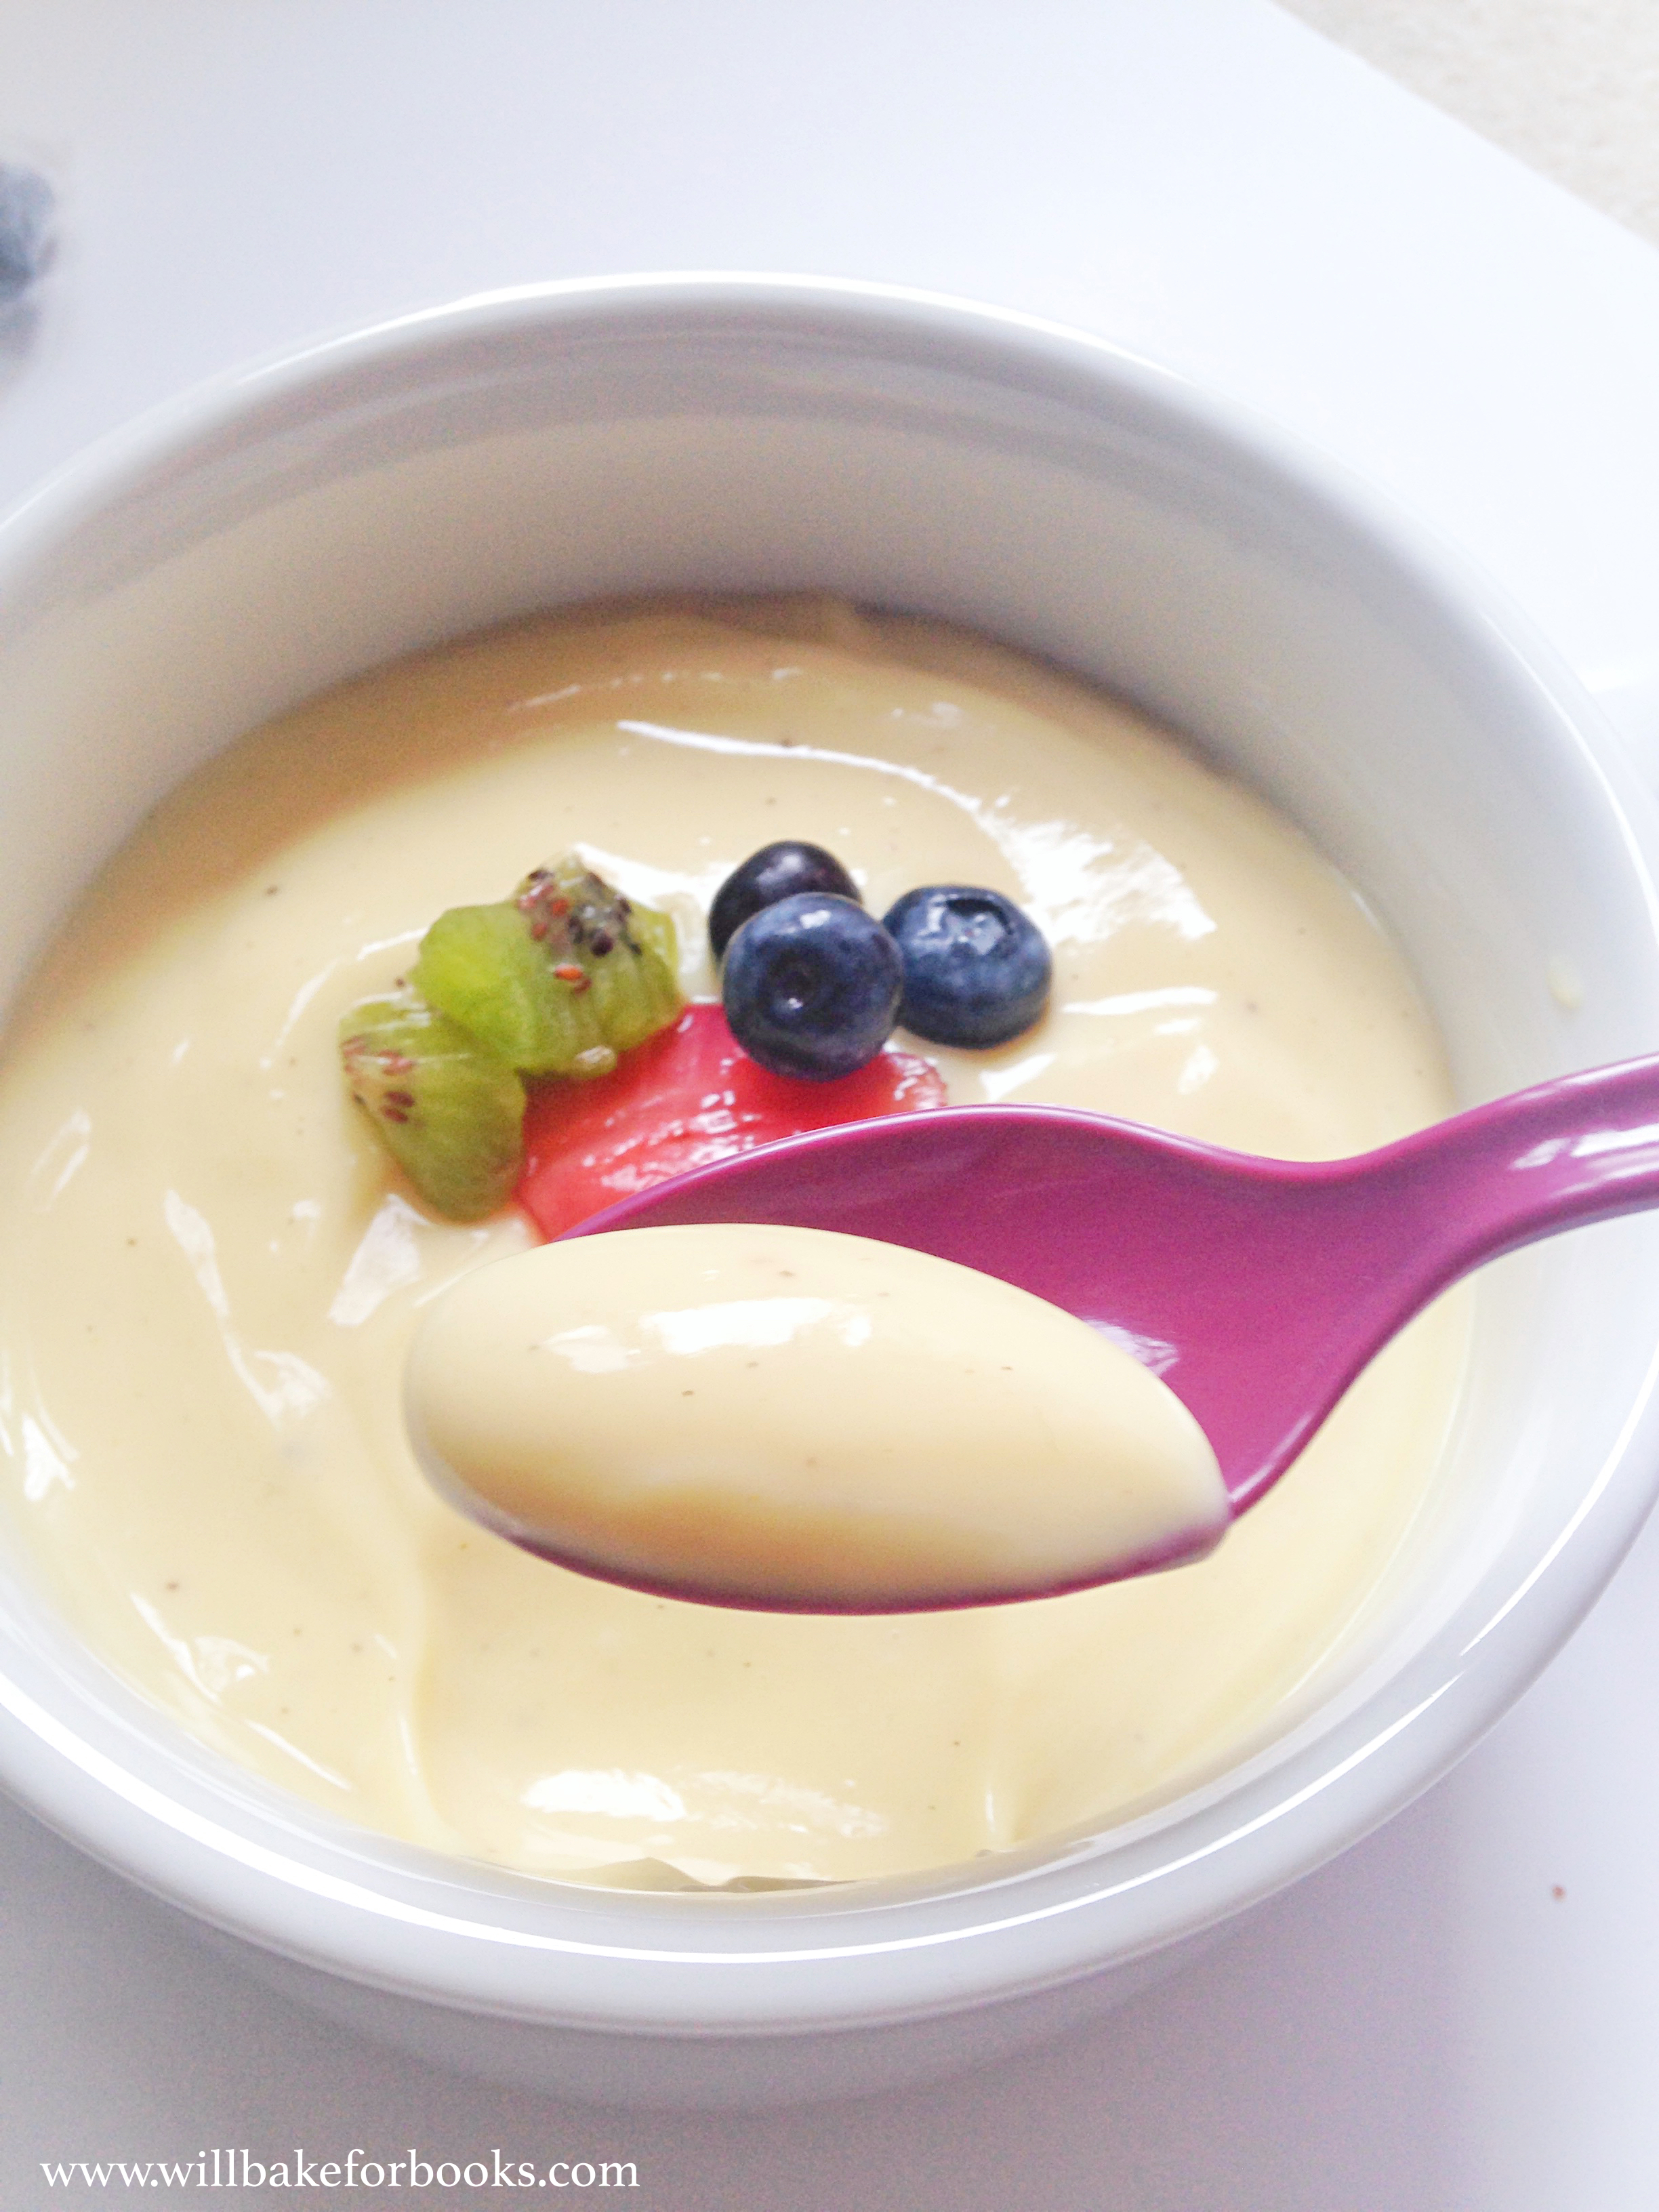 Fresh Fruit Napoleon with Homemade Vanilla Bean Pudding. Recipe found on willbakeforbooks.com!